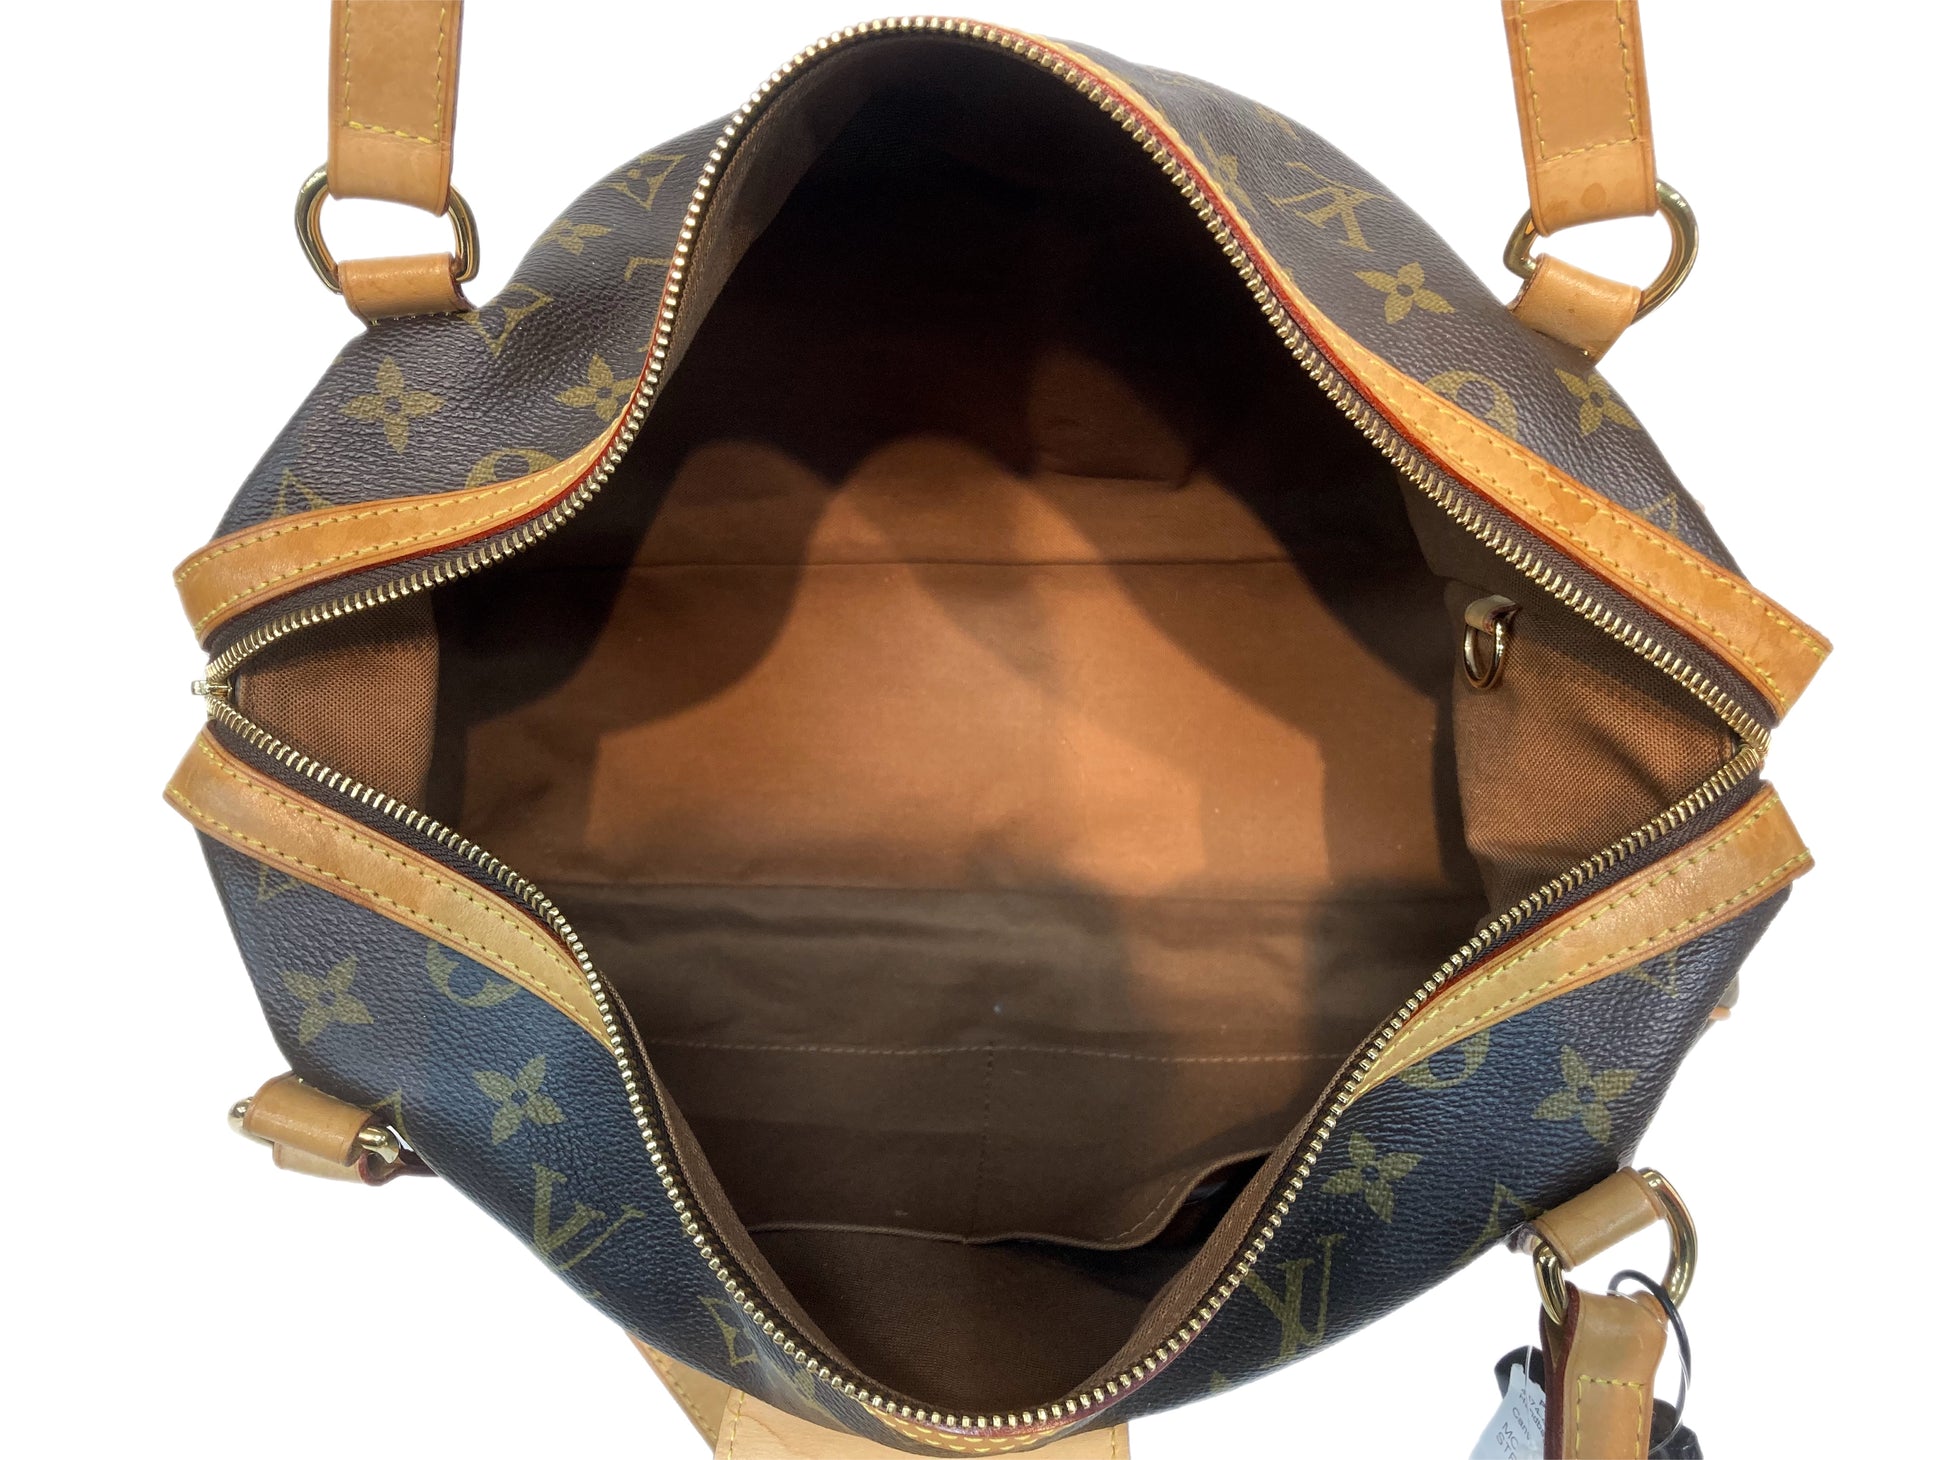 Monogram Canvas Stresa Handbag Louis Vuitton, buy pre-owned at 630 EUR